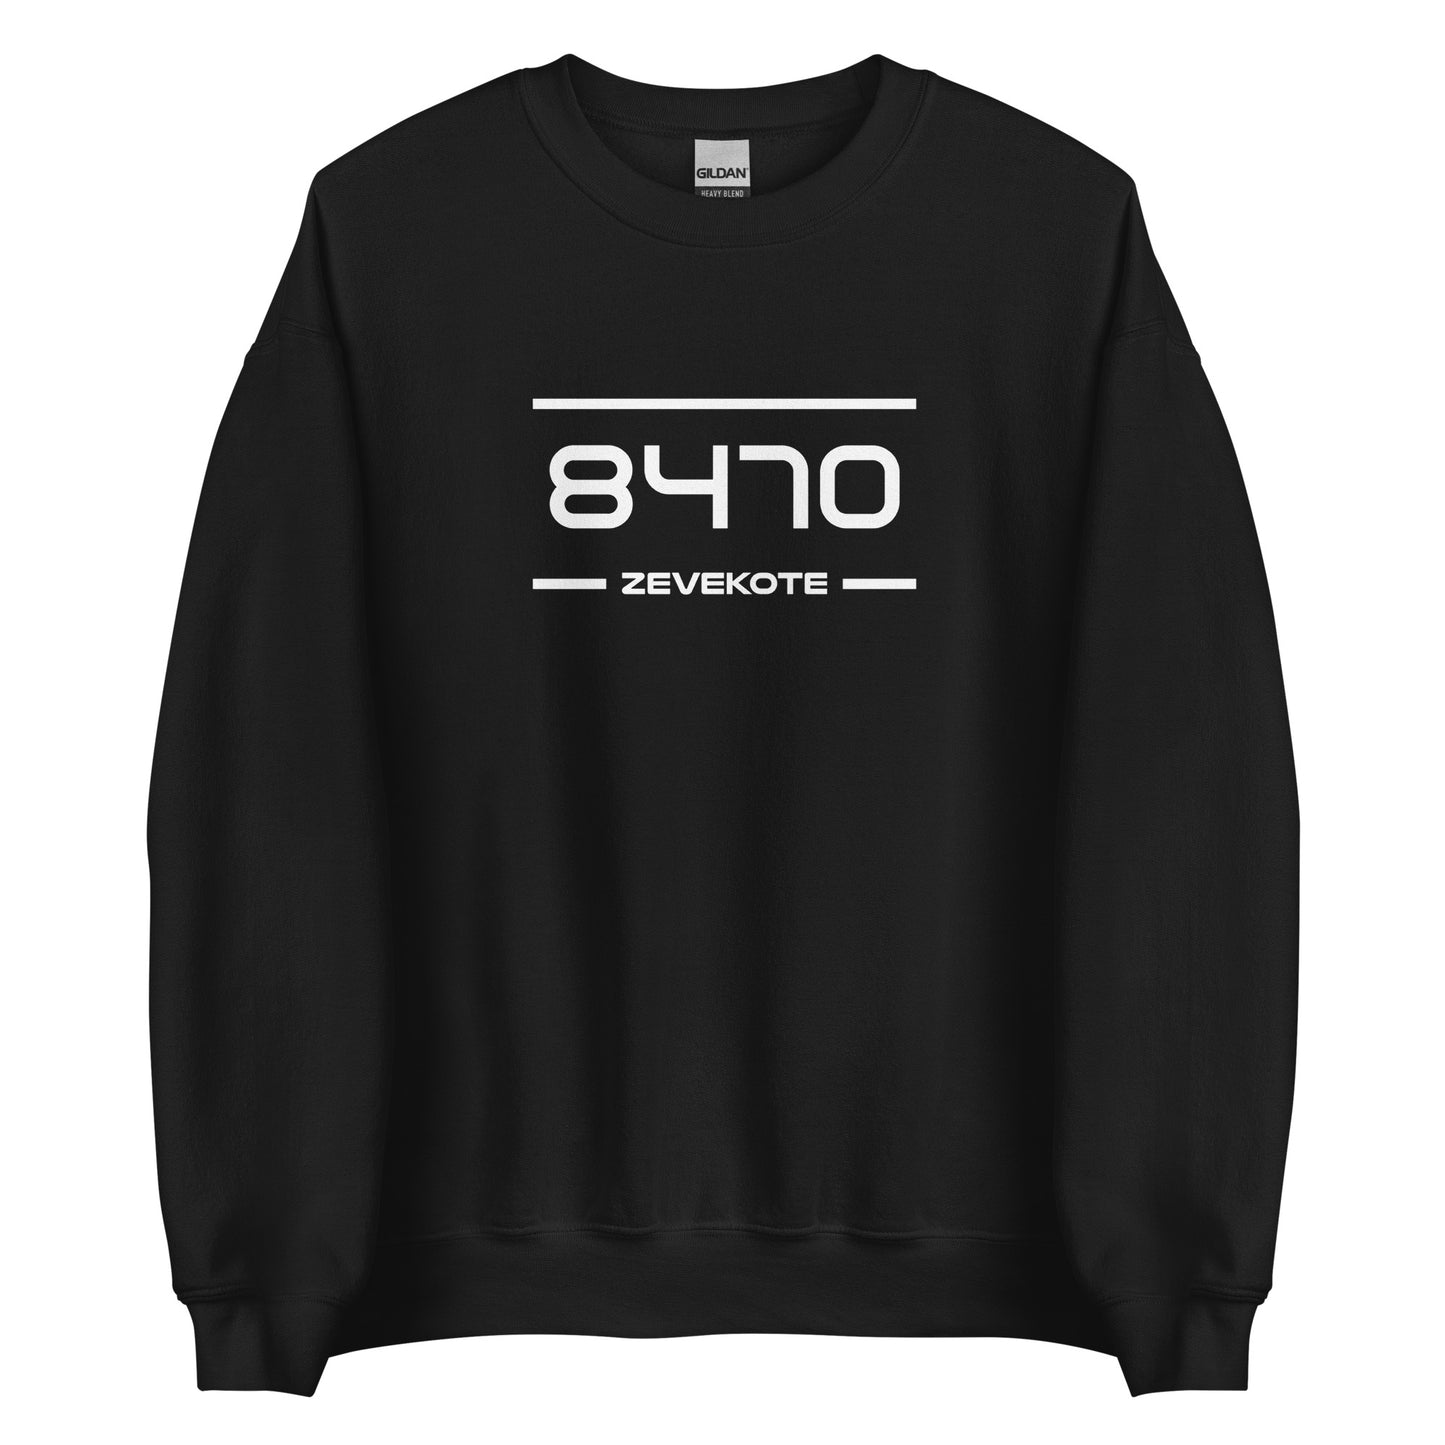 Sweater - 8470 - Zevekote (M/V)